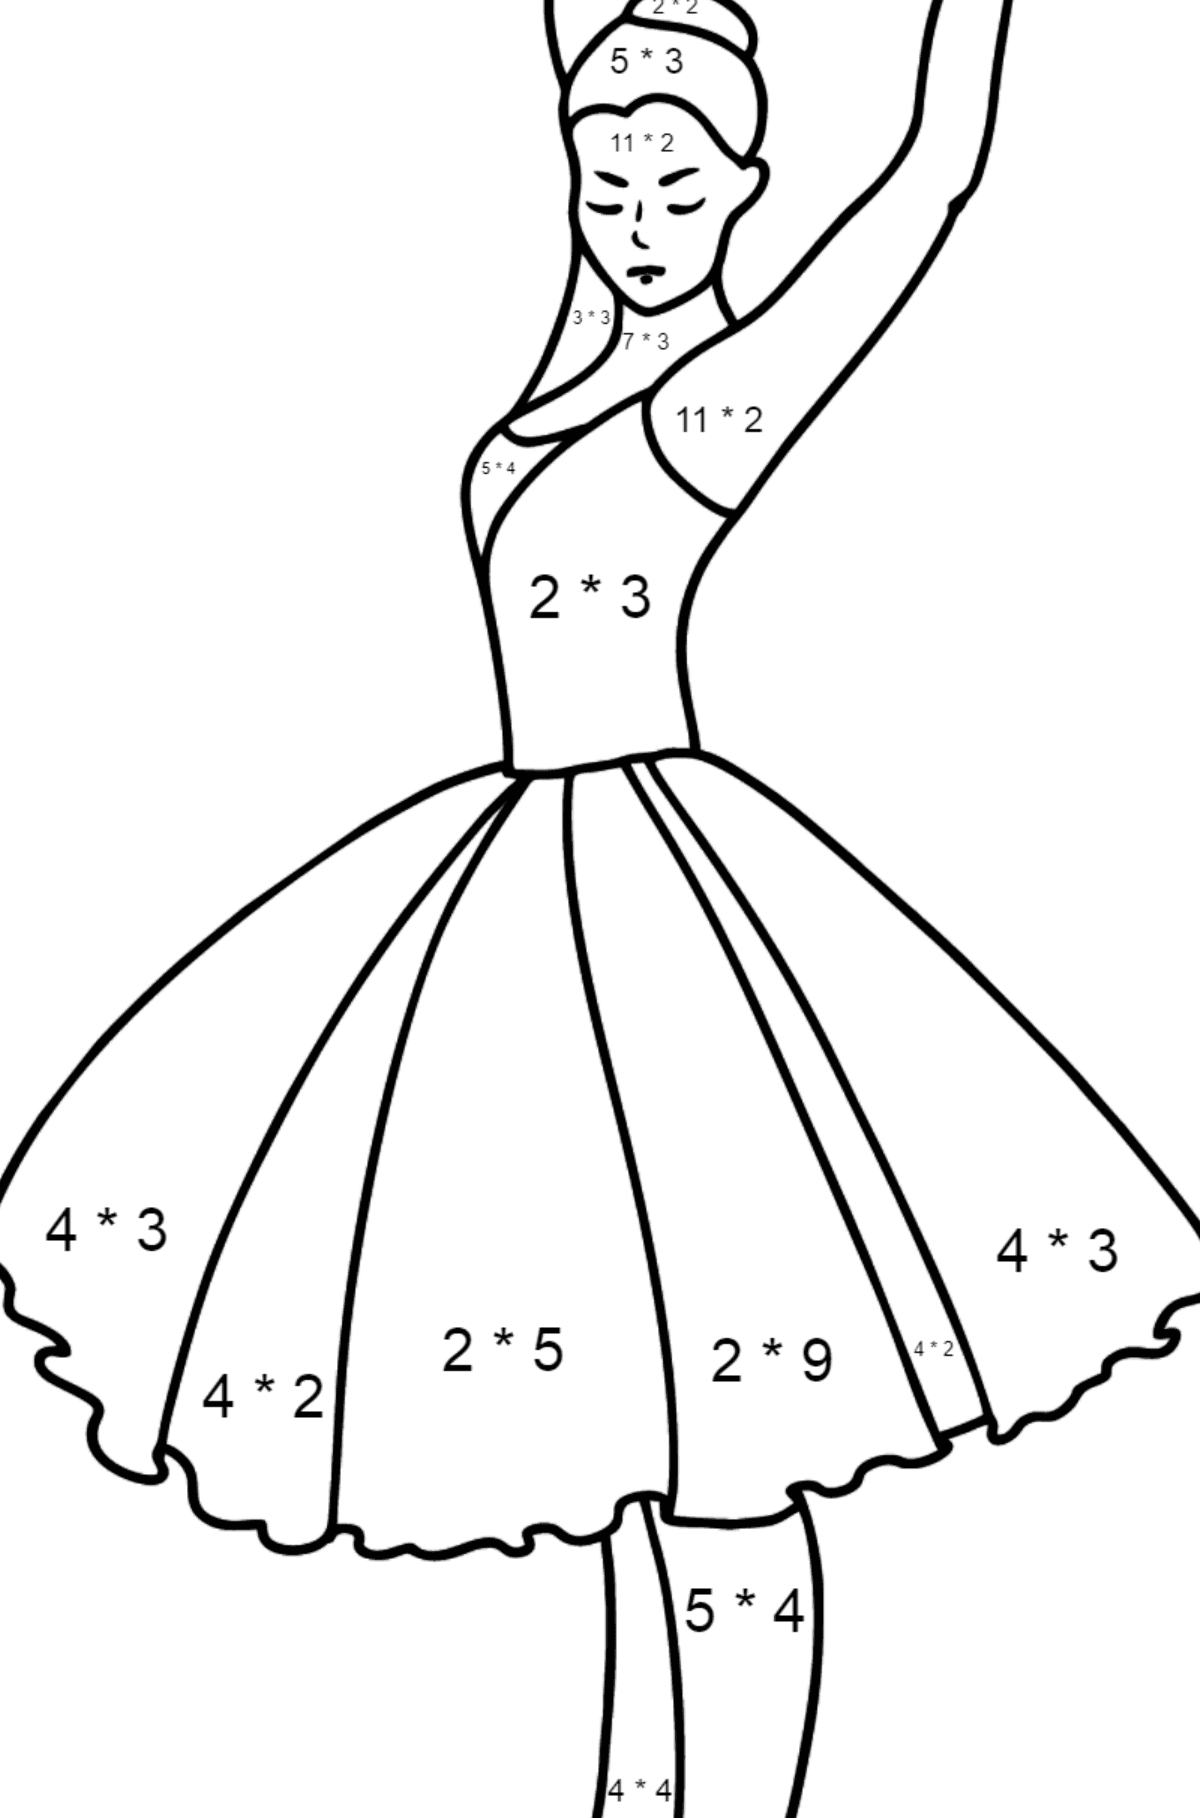 Ausmalbildn - Ballerina tanzen - Mathe Ausmalbilder - Multiplikation für Kinder